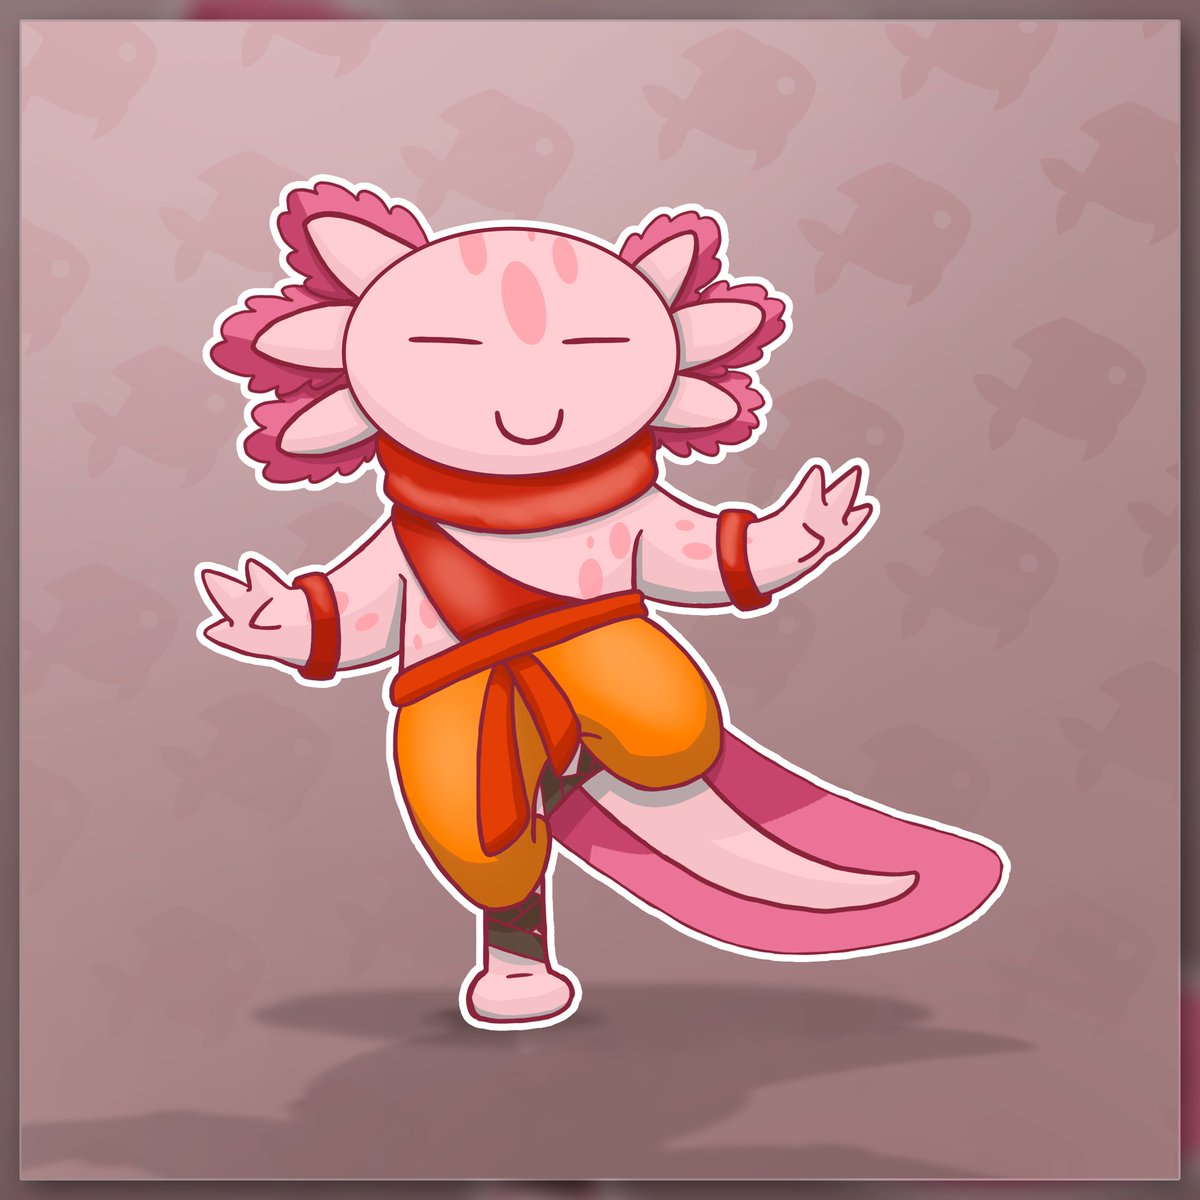 Axolotl + Monge :3 
.
.
.
.
.
#axolotl #monge #monk #DungeonandDragons #digitalart